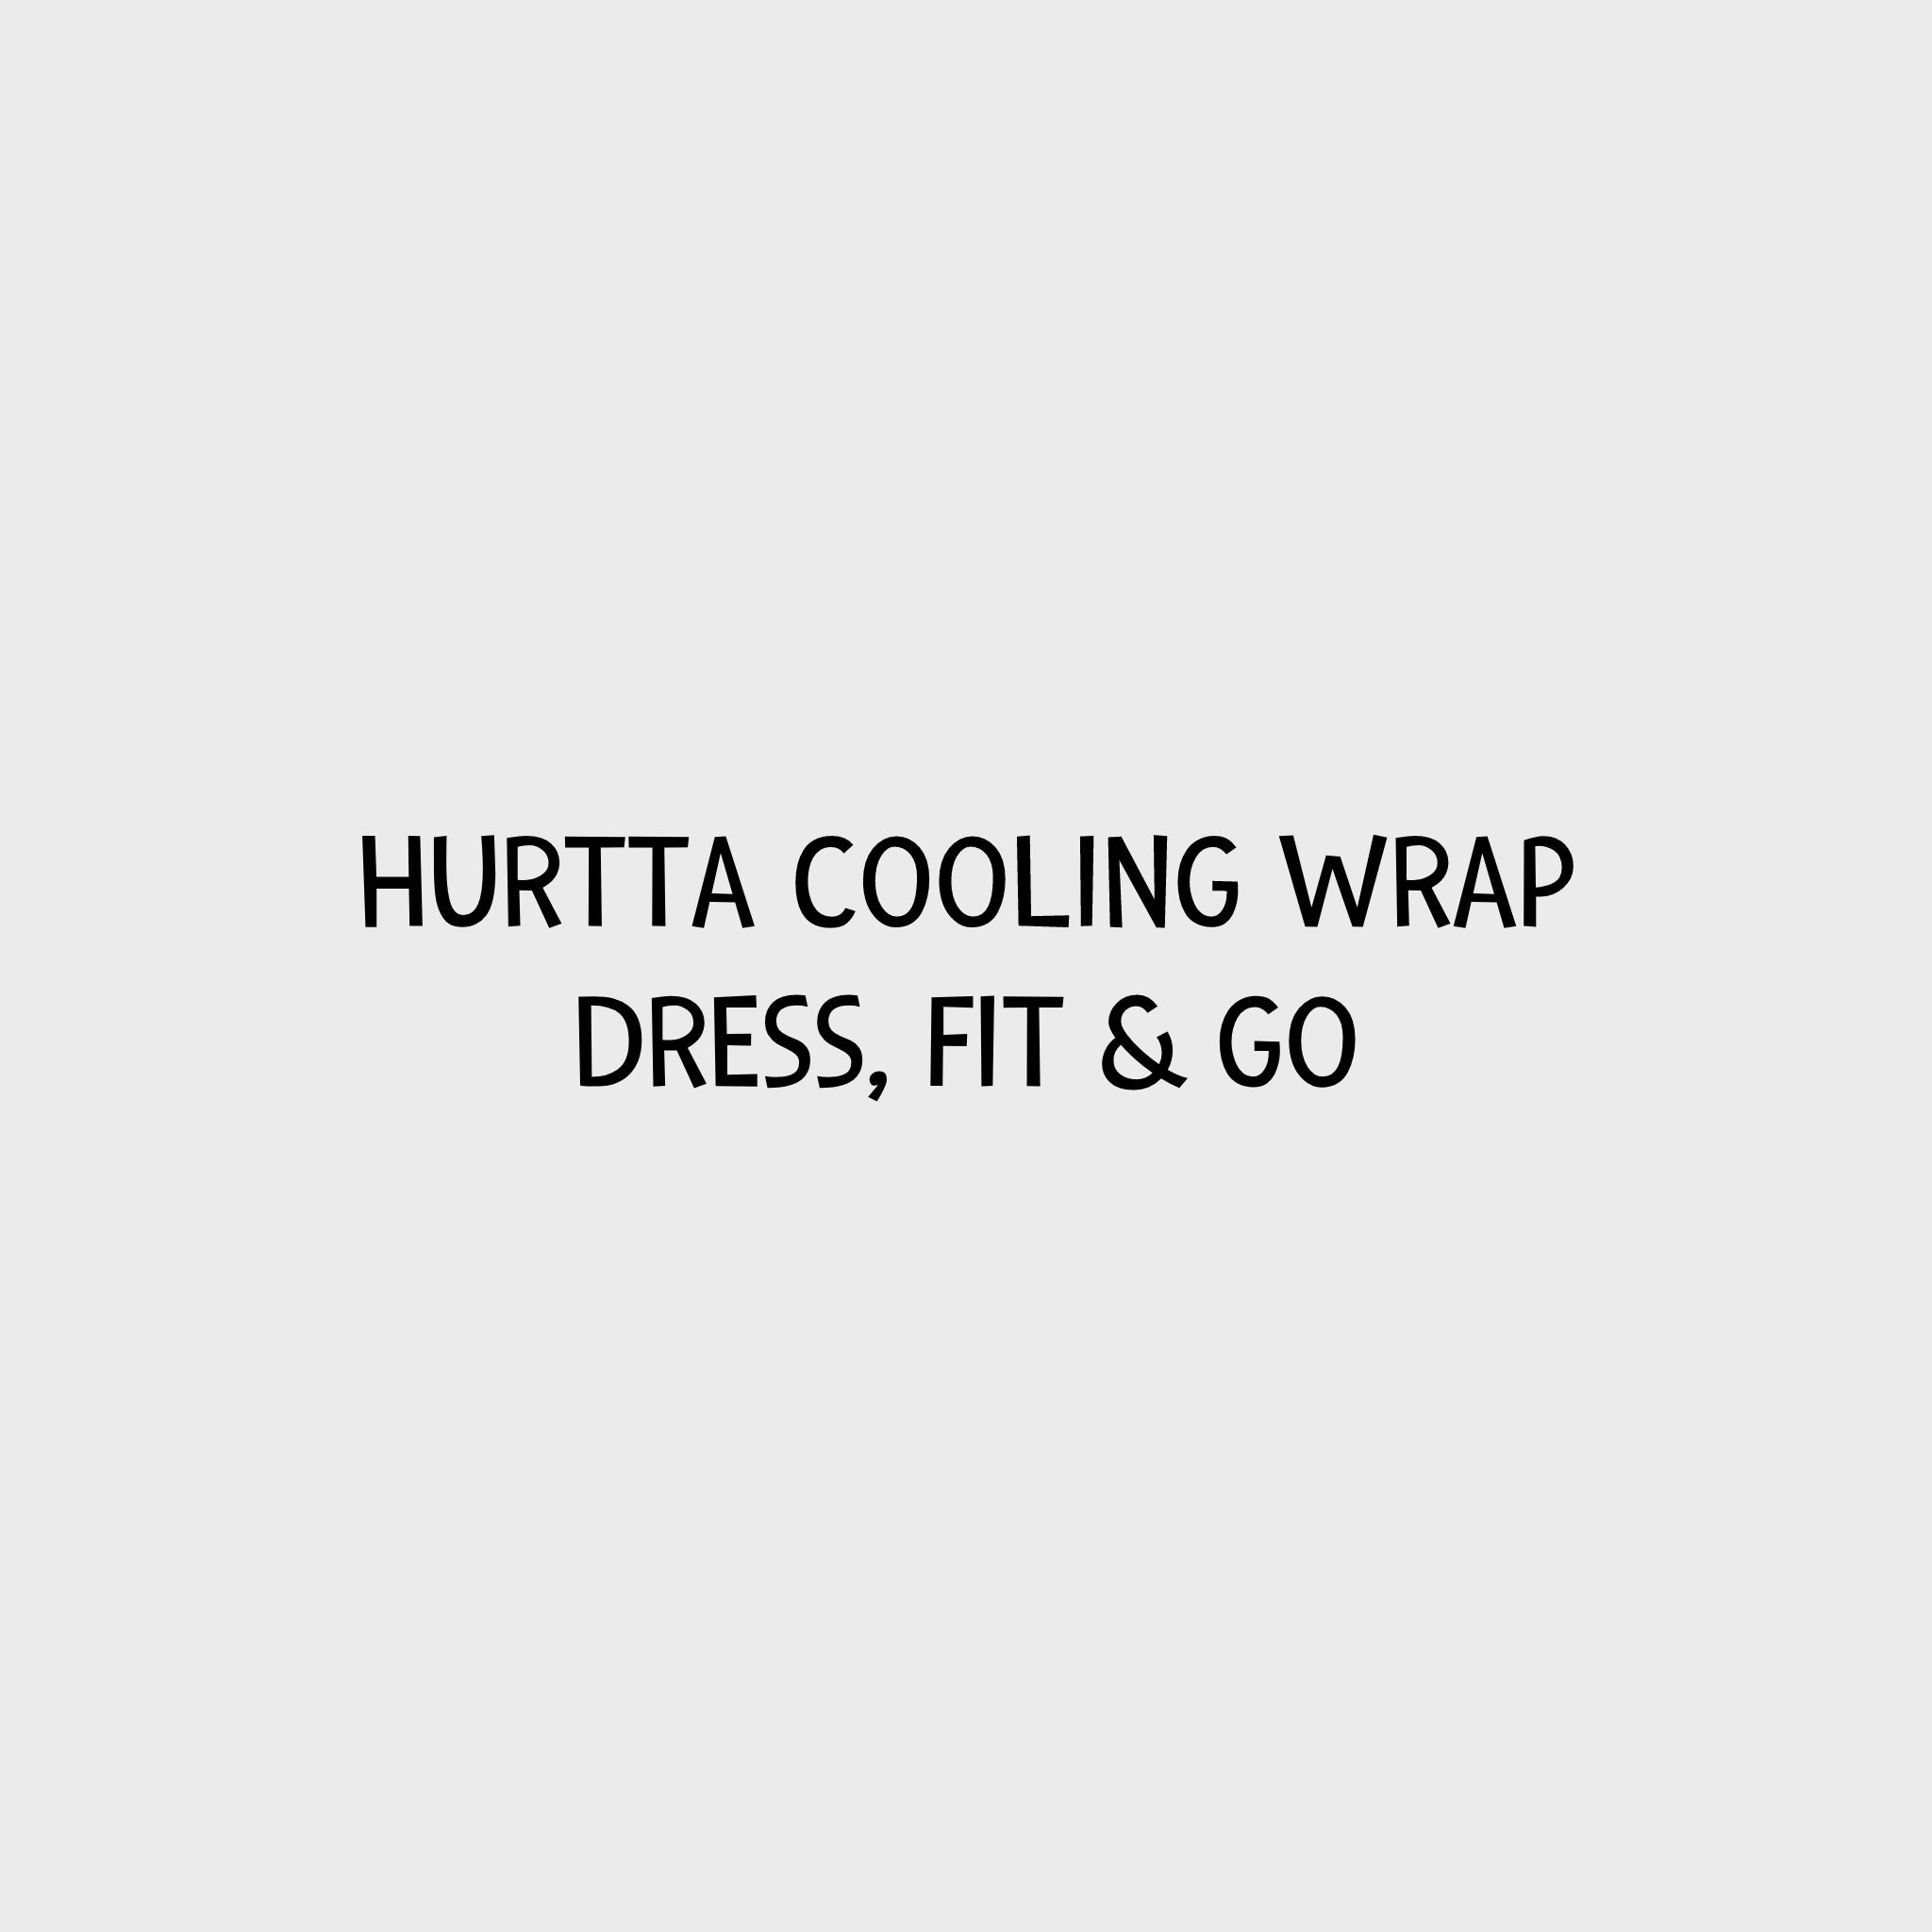 Video - Hurtta Cooling Wrap Dress, Fit & Go